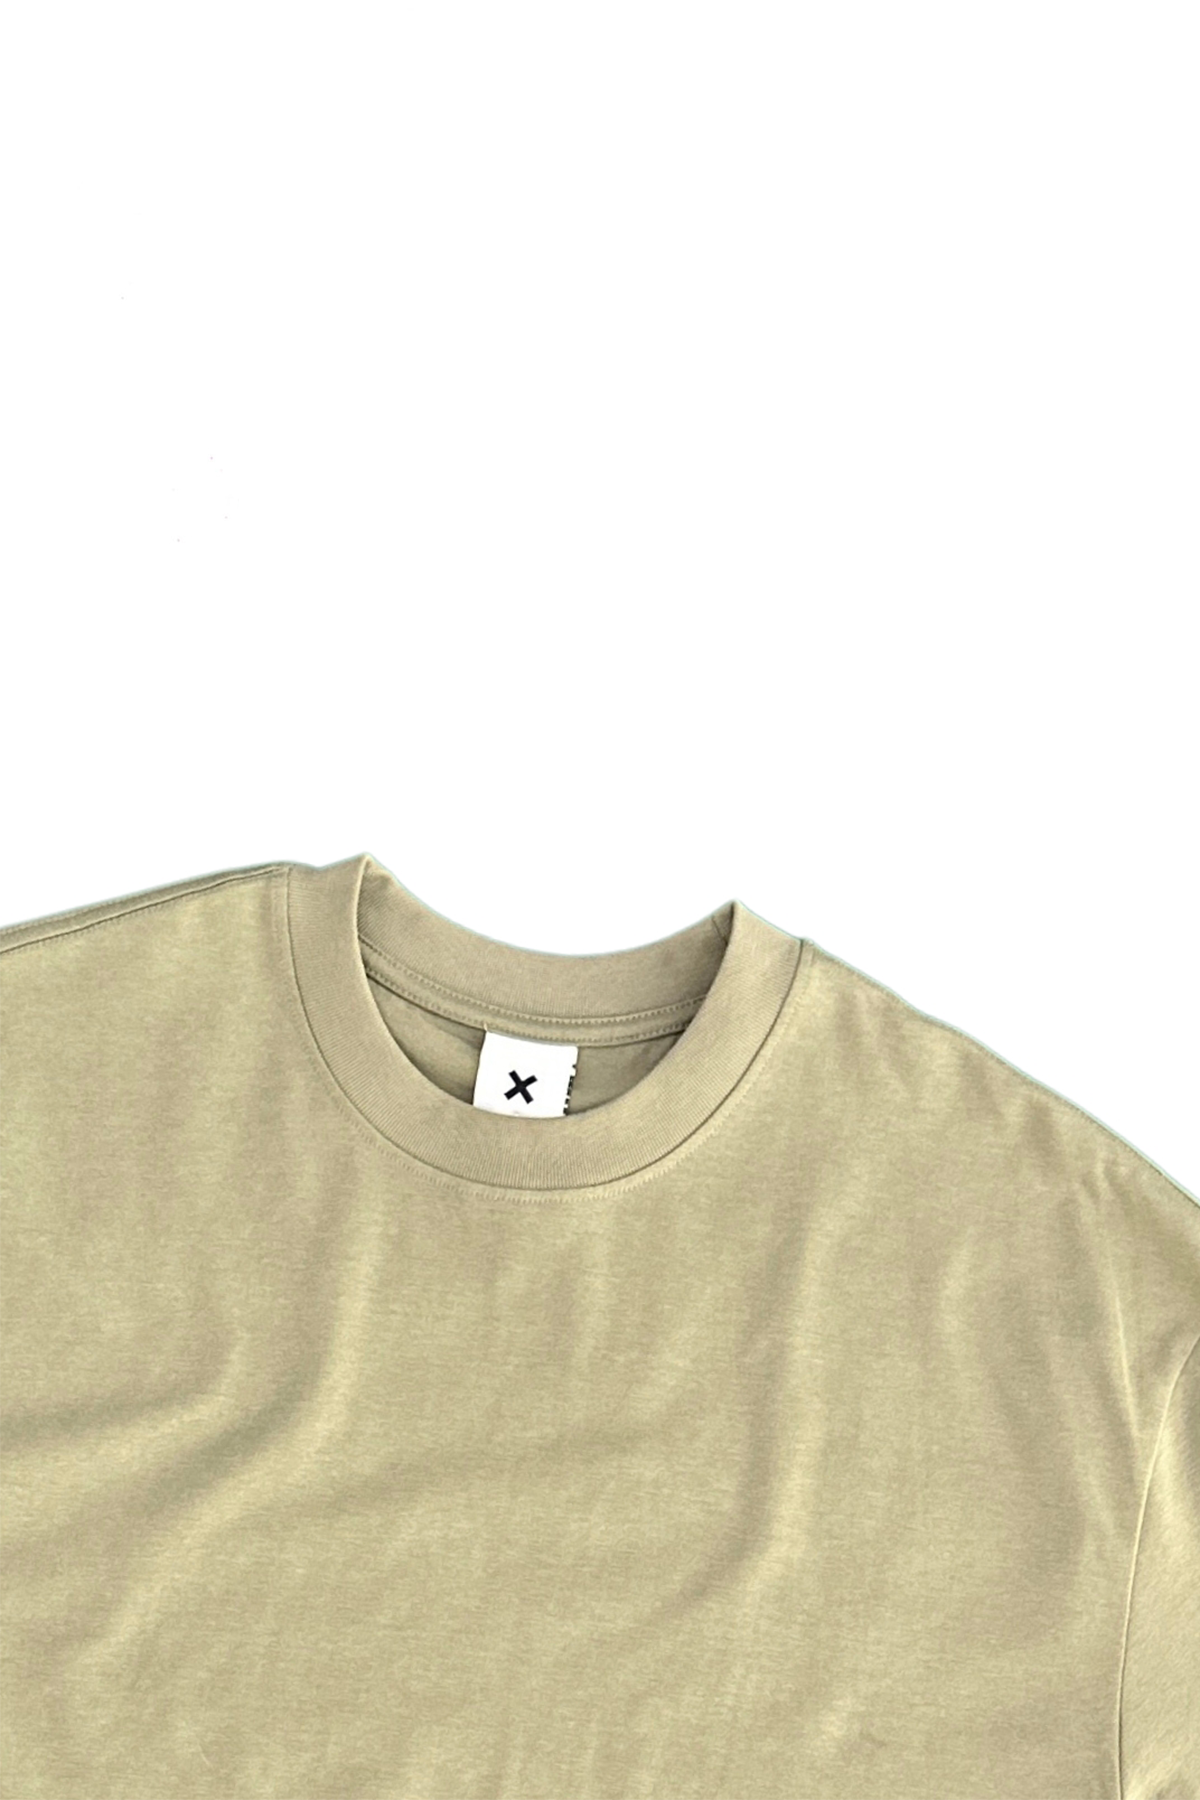 Oversized-Crew-Neck-T-shirt-Unisex-grey-front-closeup